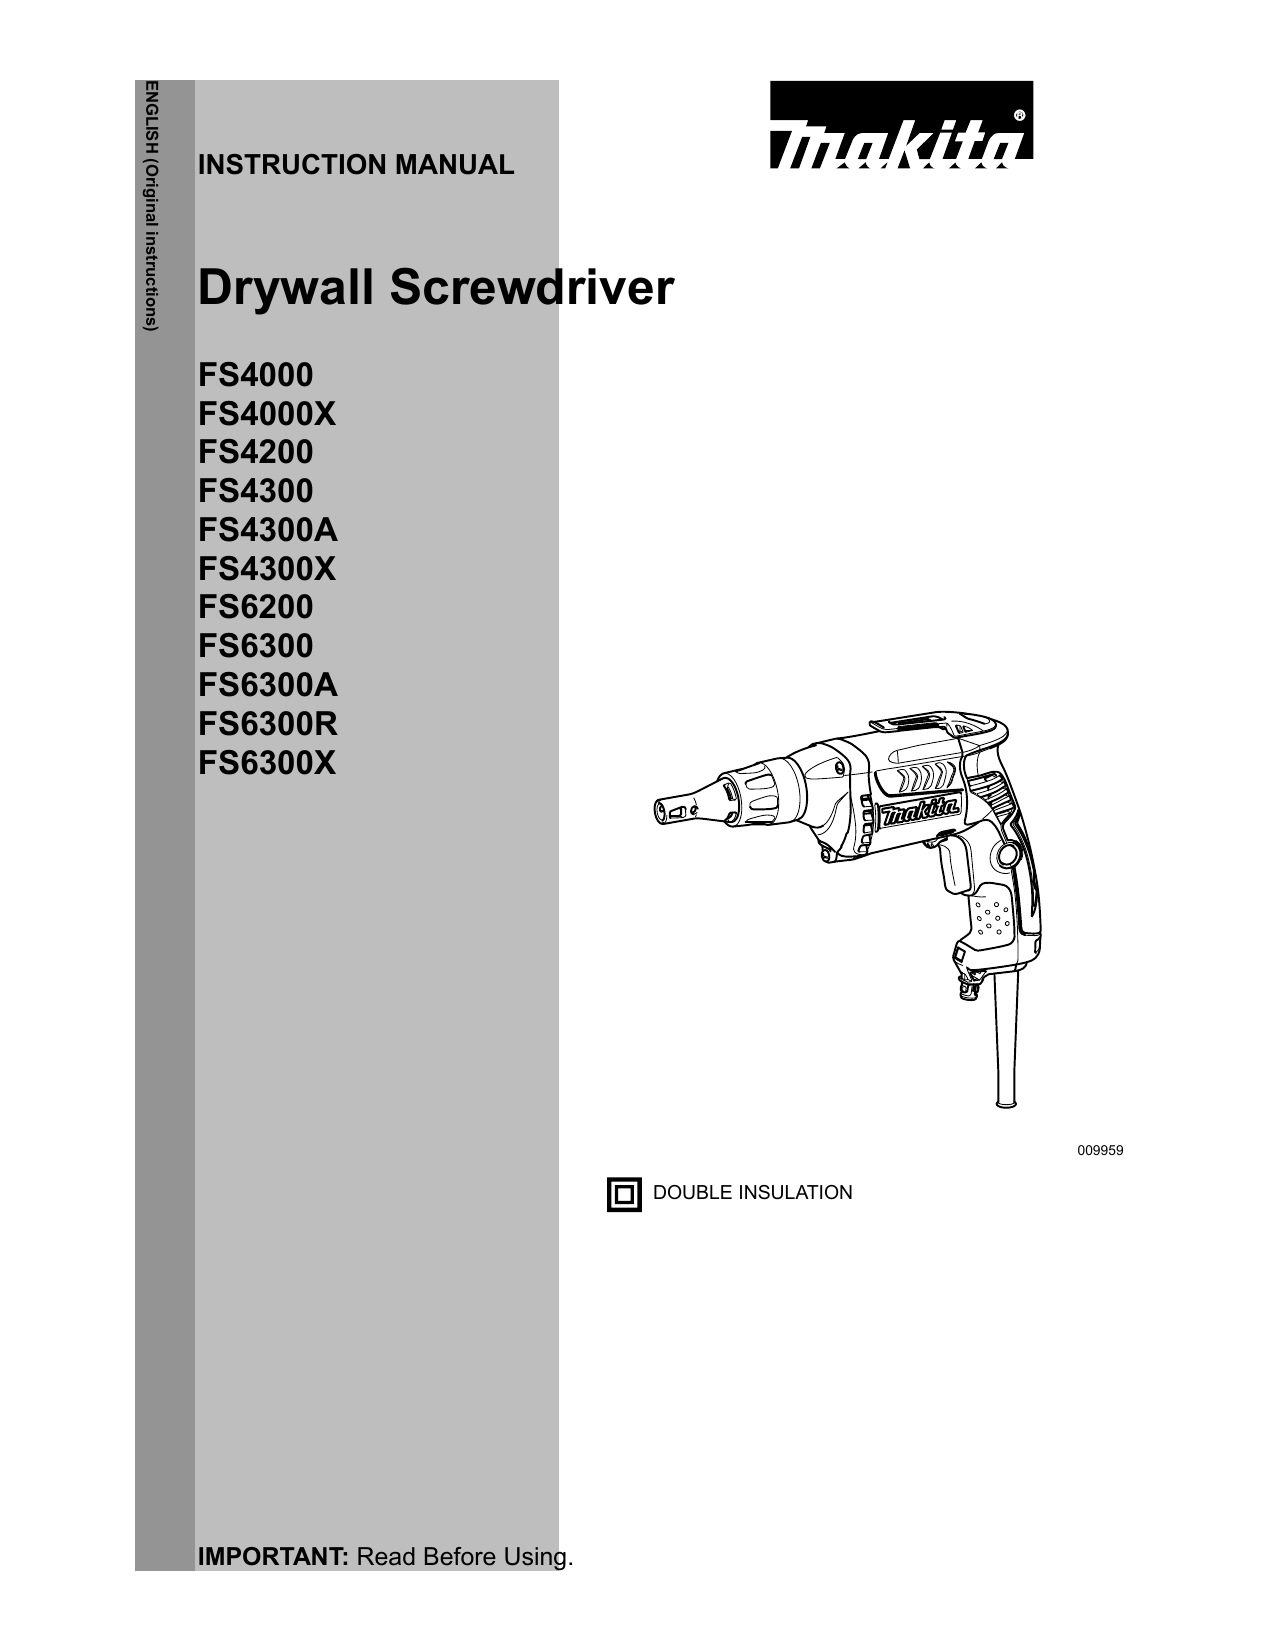 CARBON BRUSHES FOR MAKITA 6823TP Drywall Screwdriver FS4200 Drywall Screwdriver 